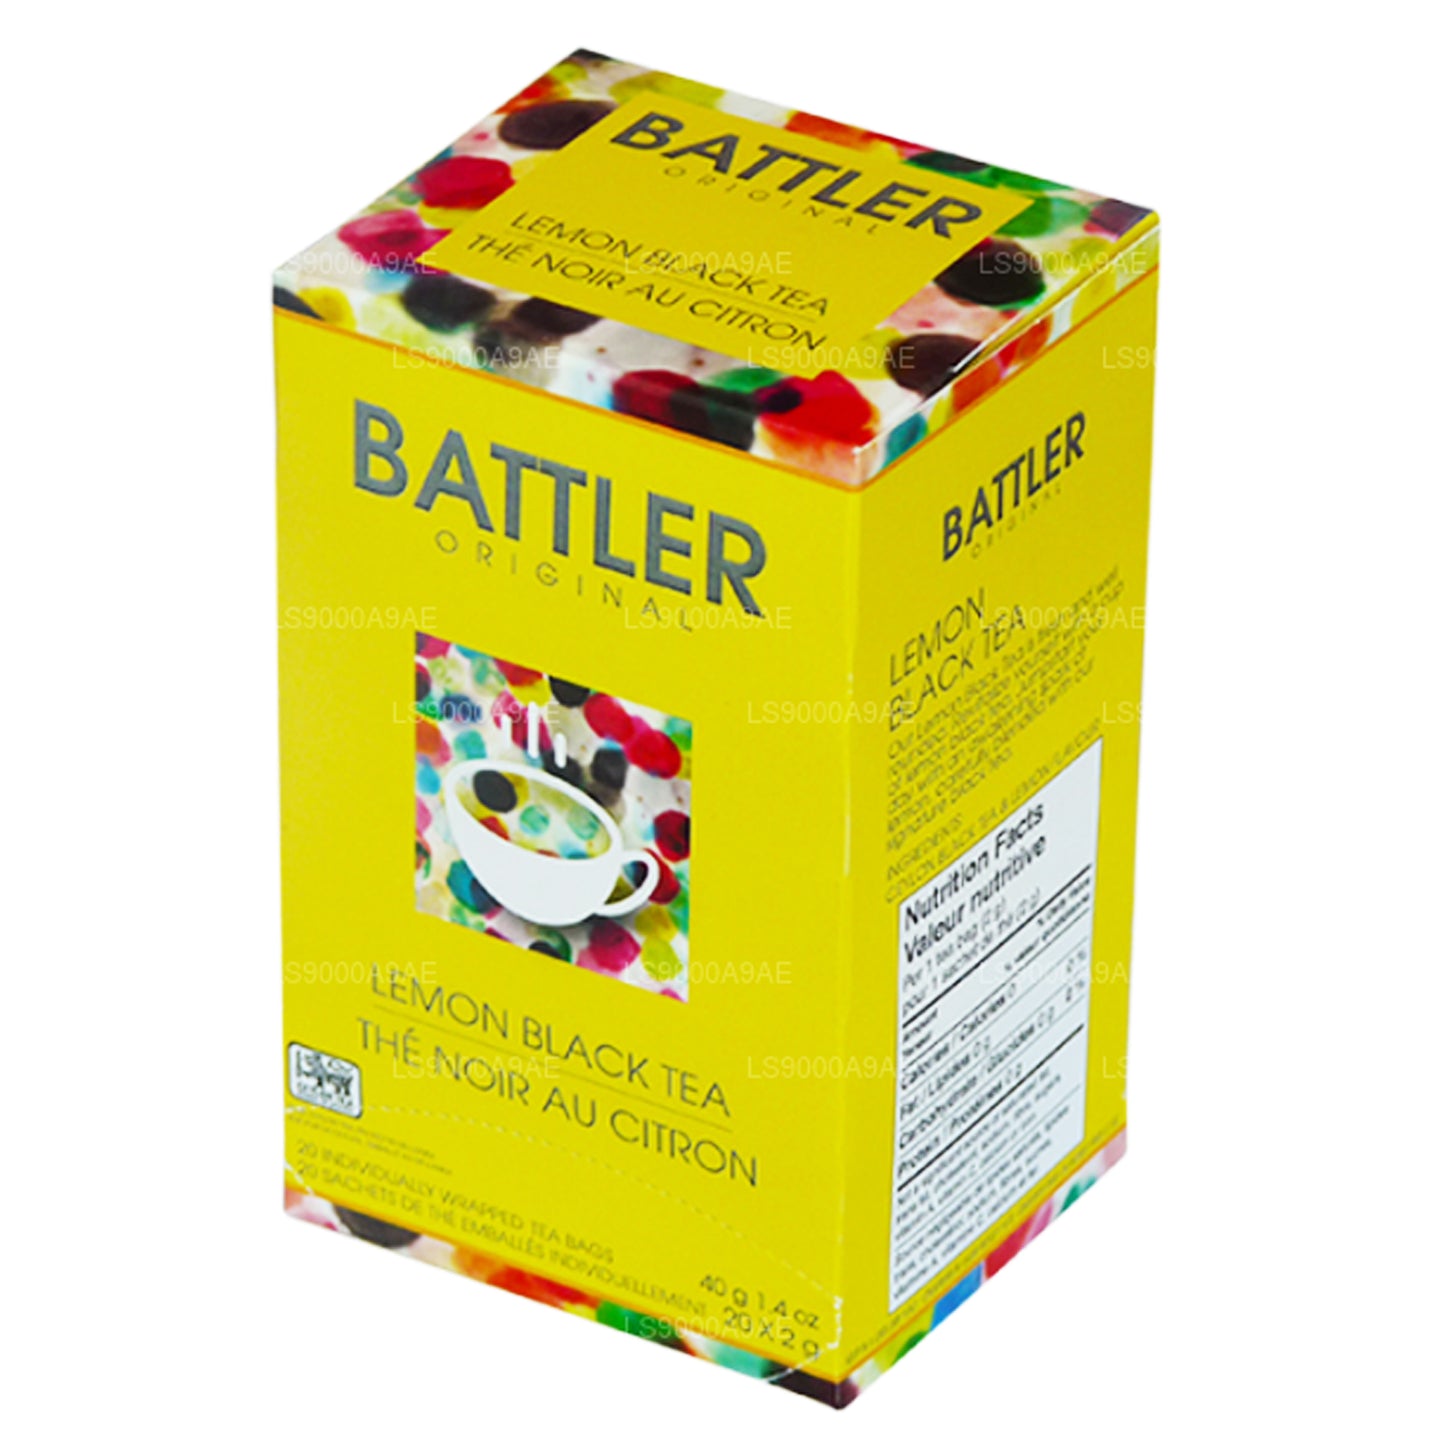 Battler Original Lemon Black Tea (40g) 20 Tea Bags